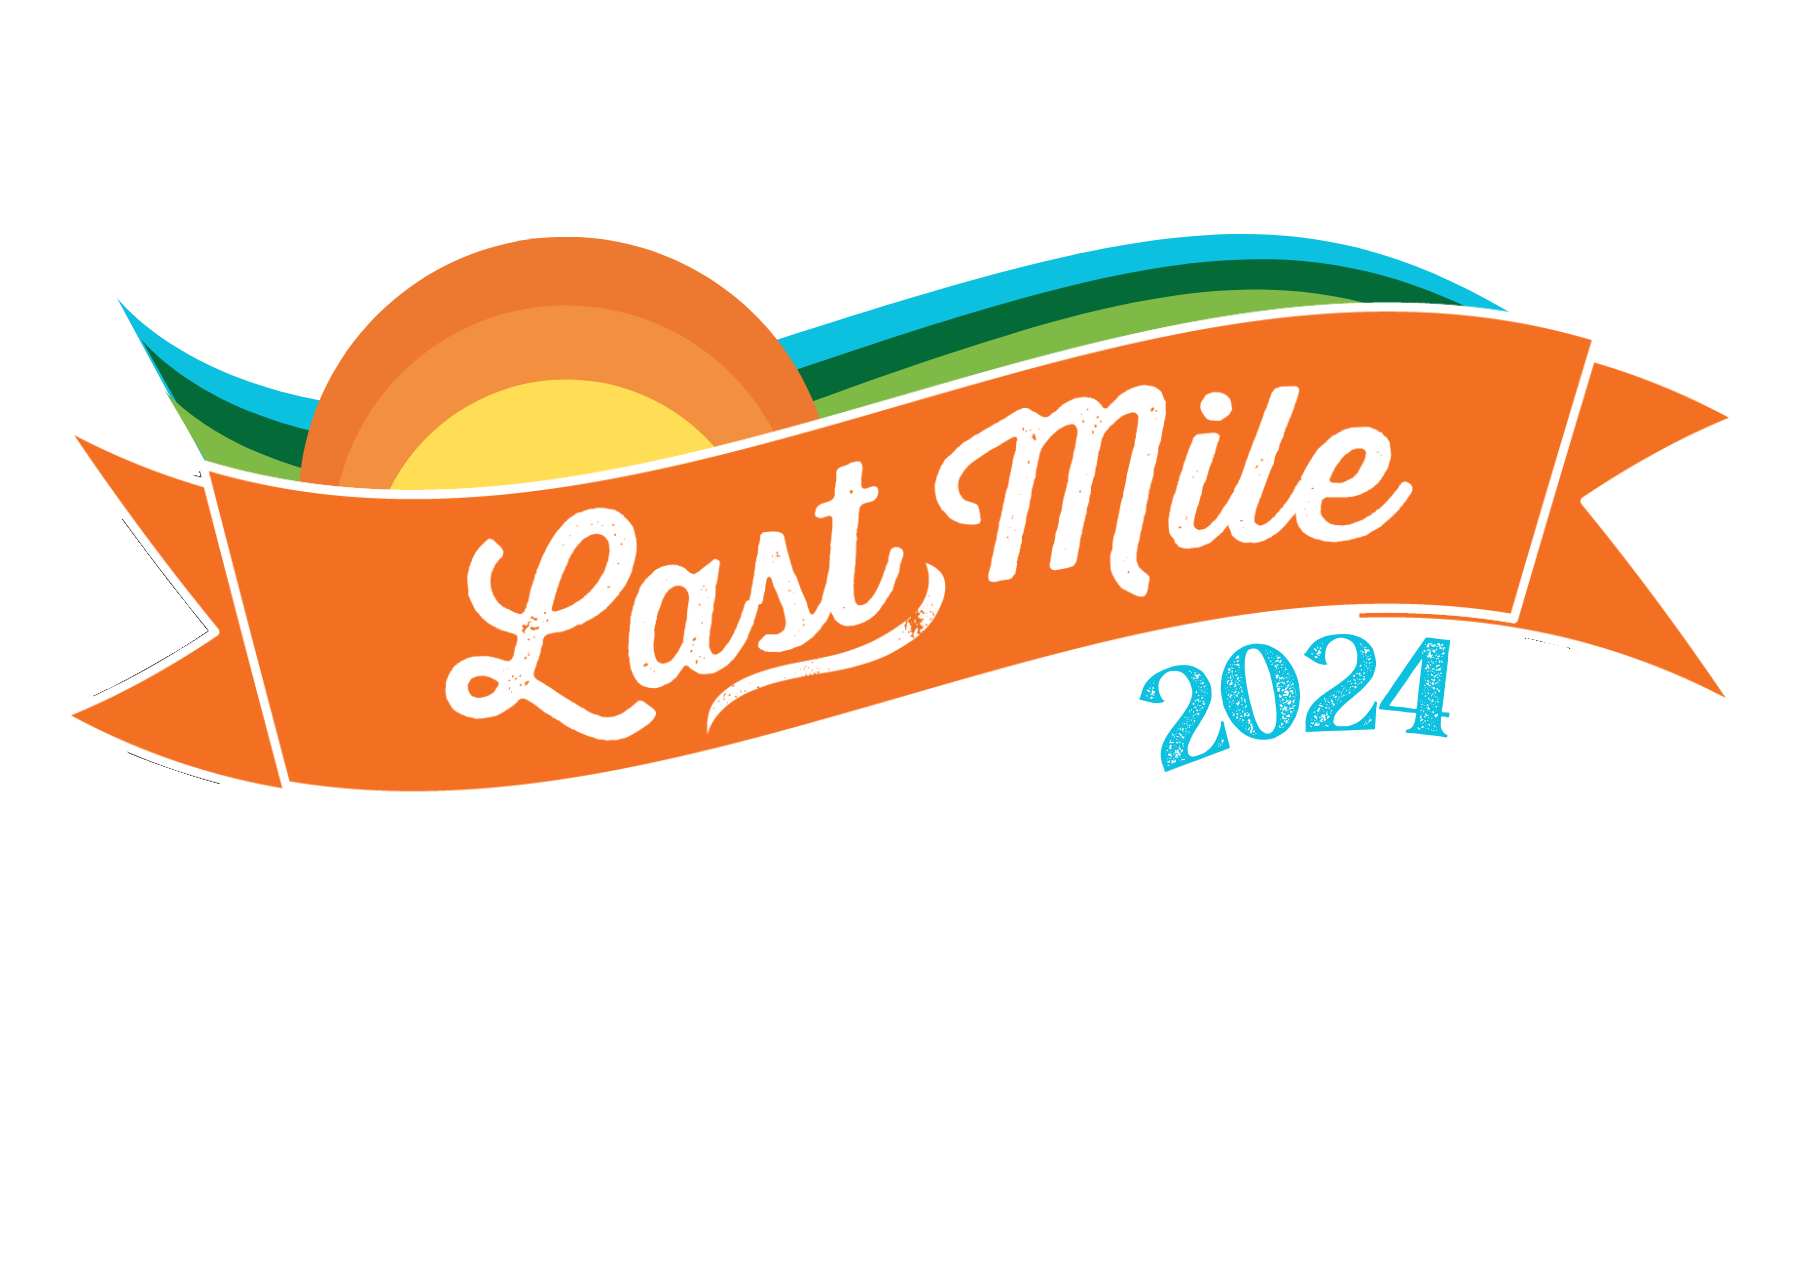 The Last Mile Ride - 2024